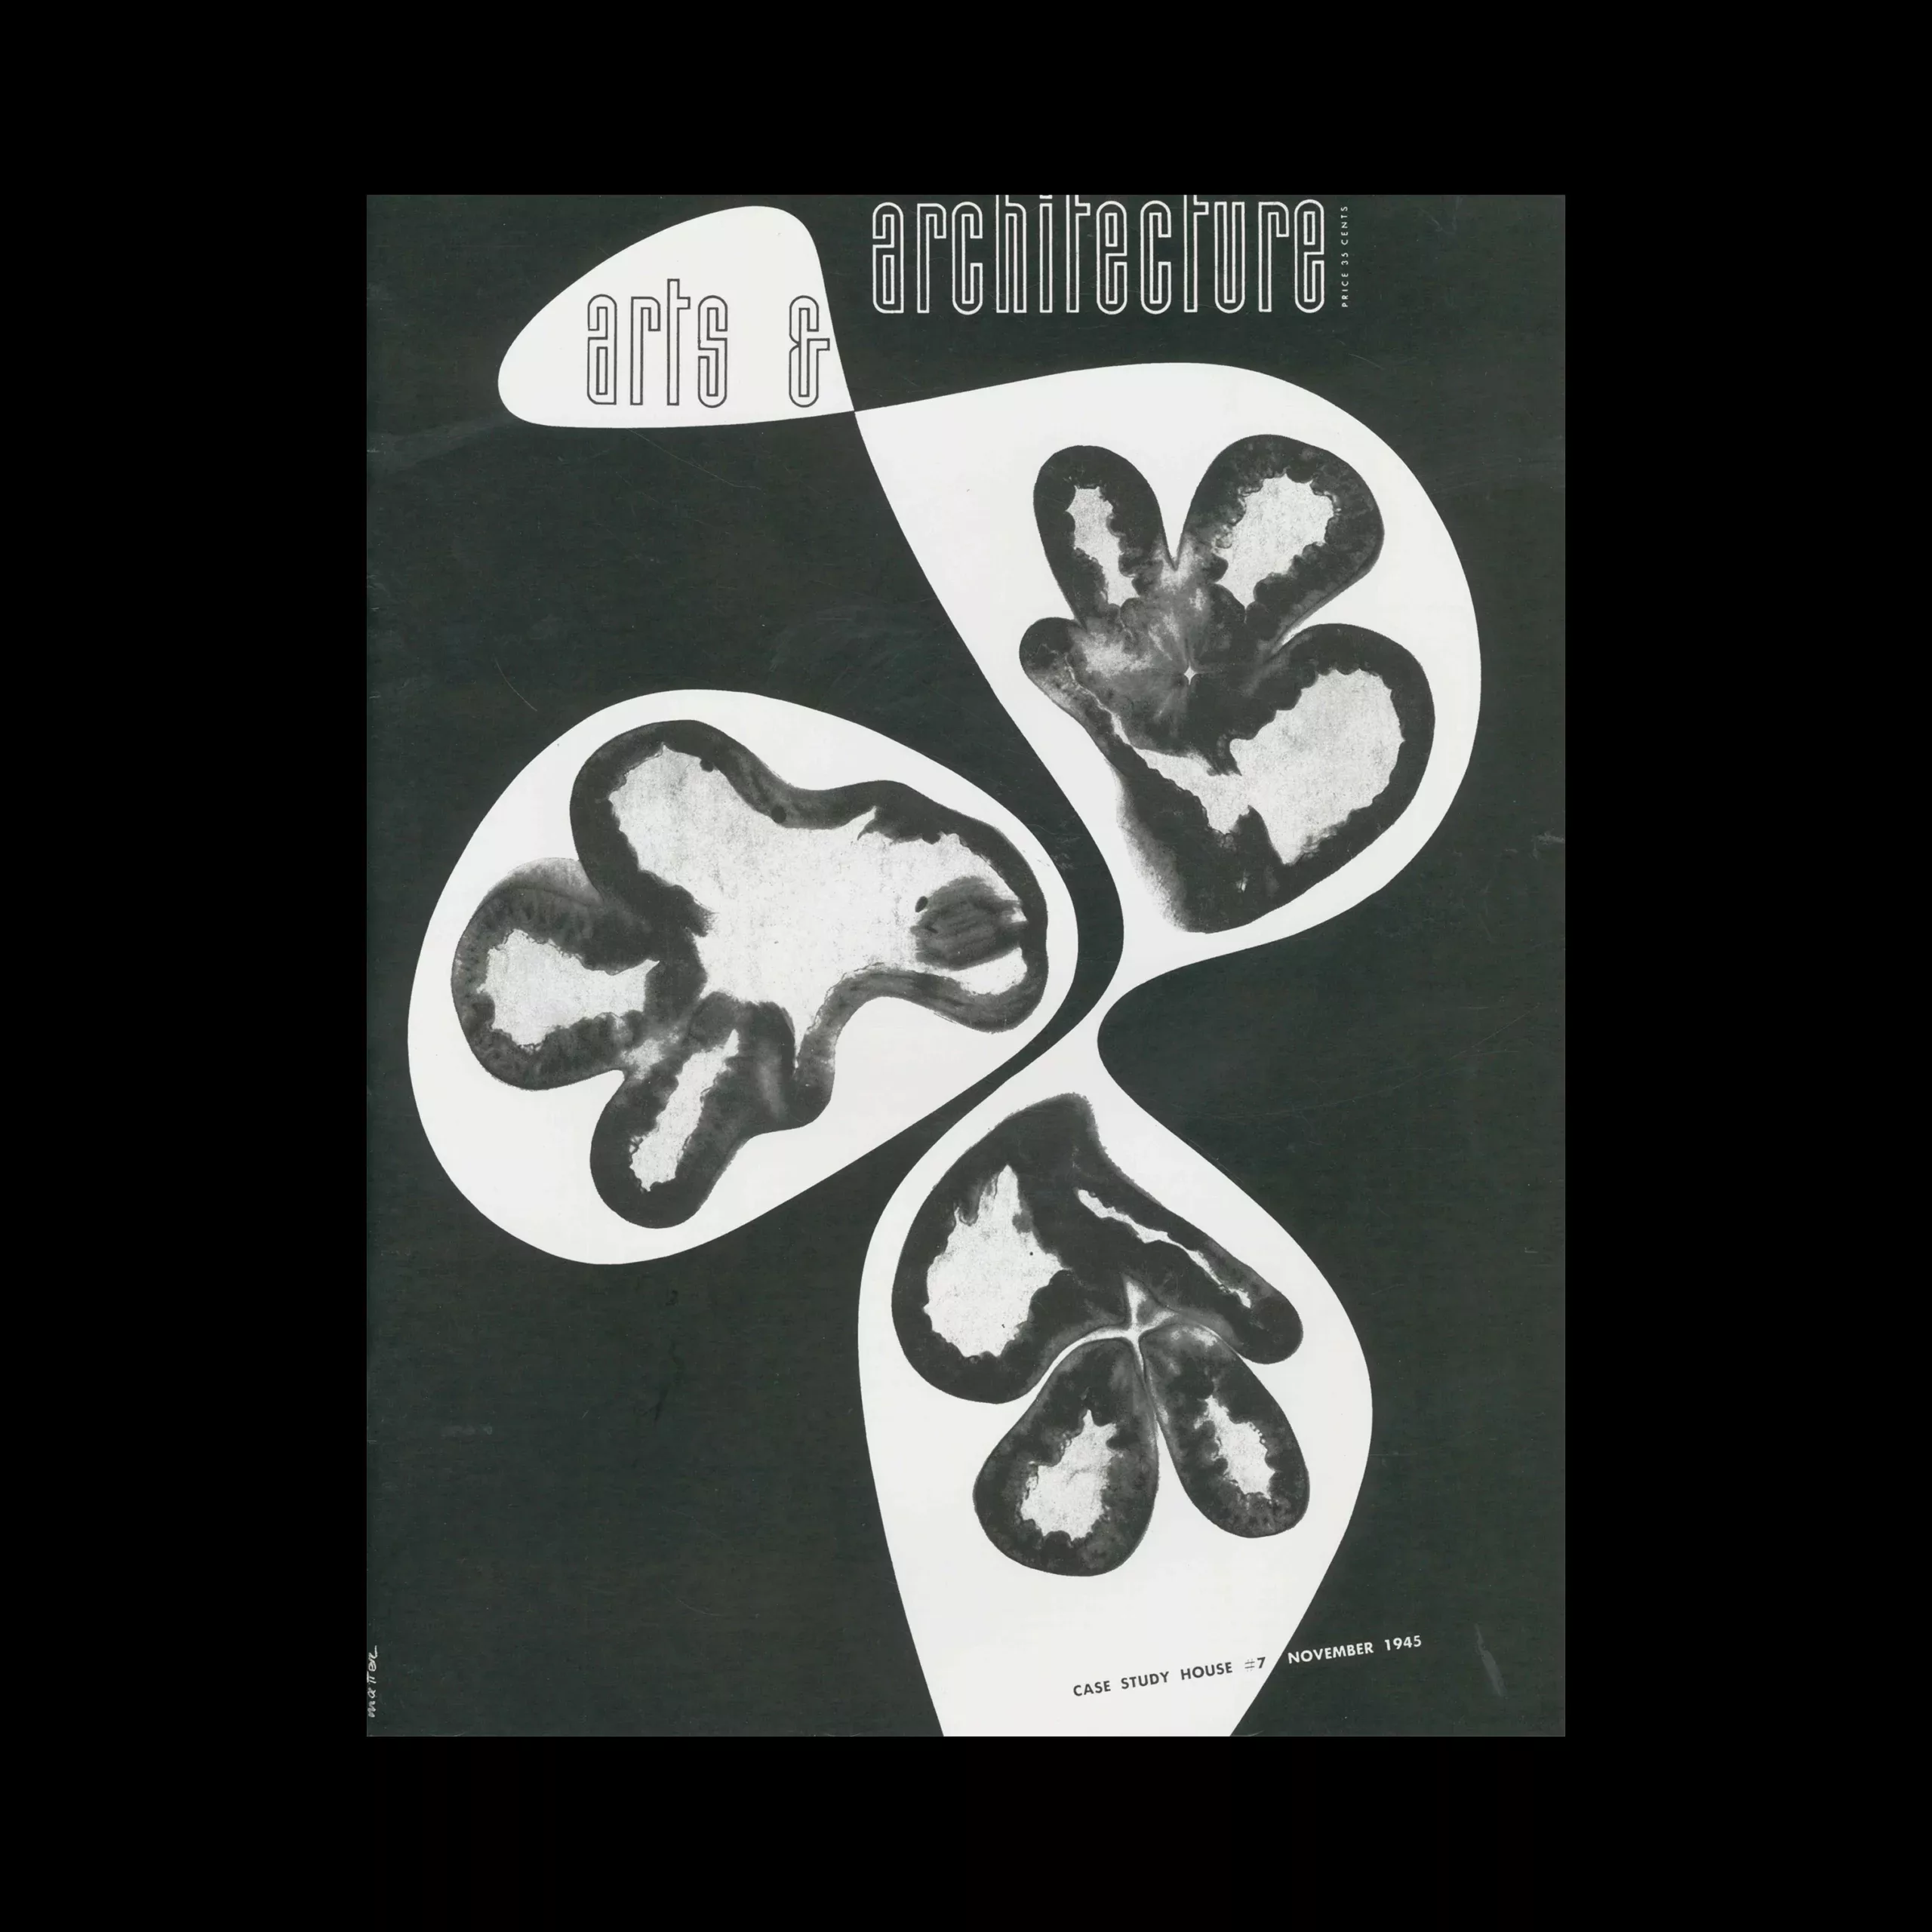 Arts & Architecture November 1945, Complete Reprint, Taschen, 2008. Cover design by Herbert Matter